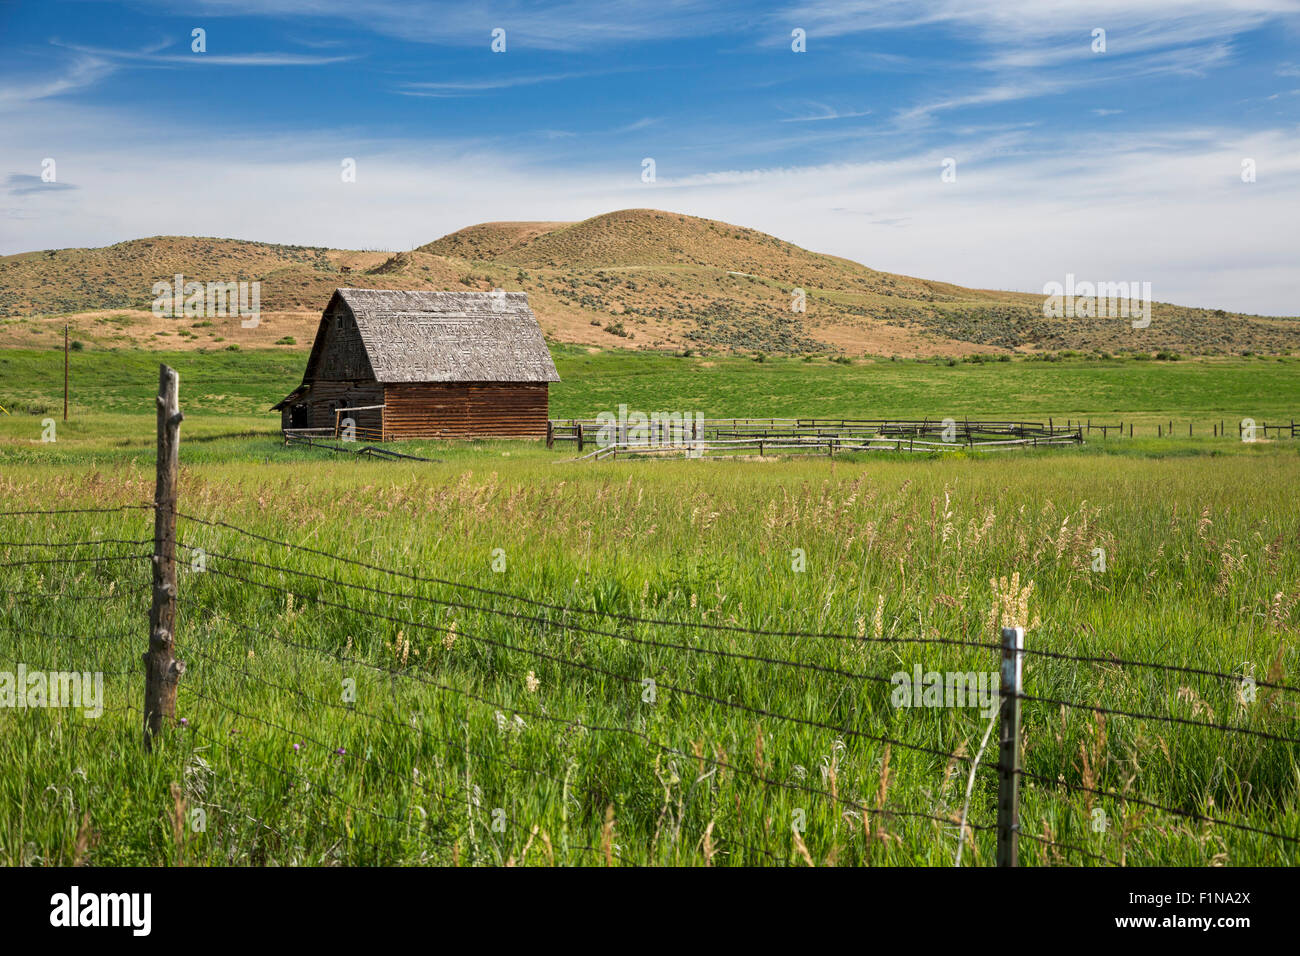 Axial, Colorado - Colorado ranch. Stock Photo